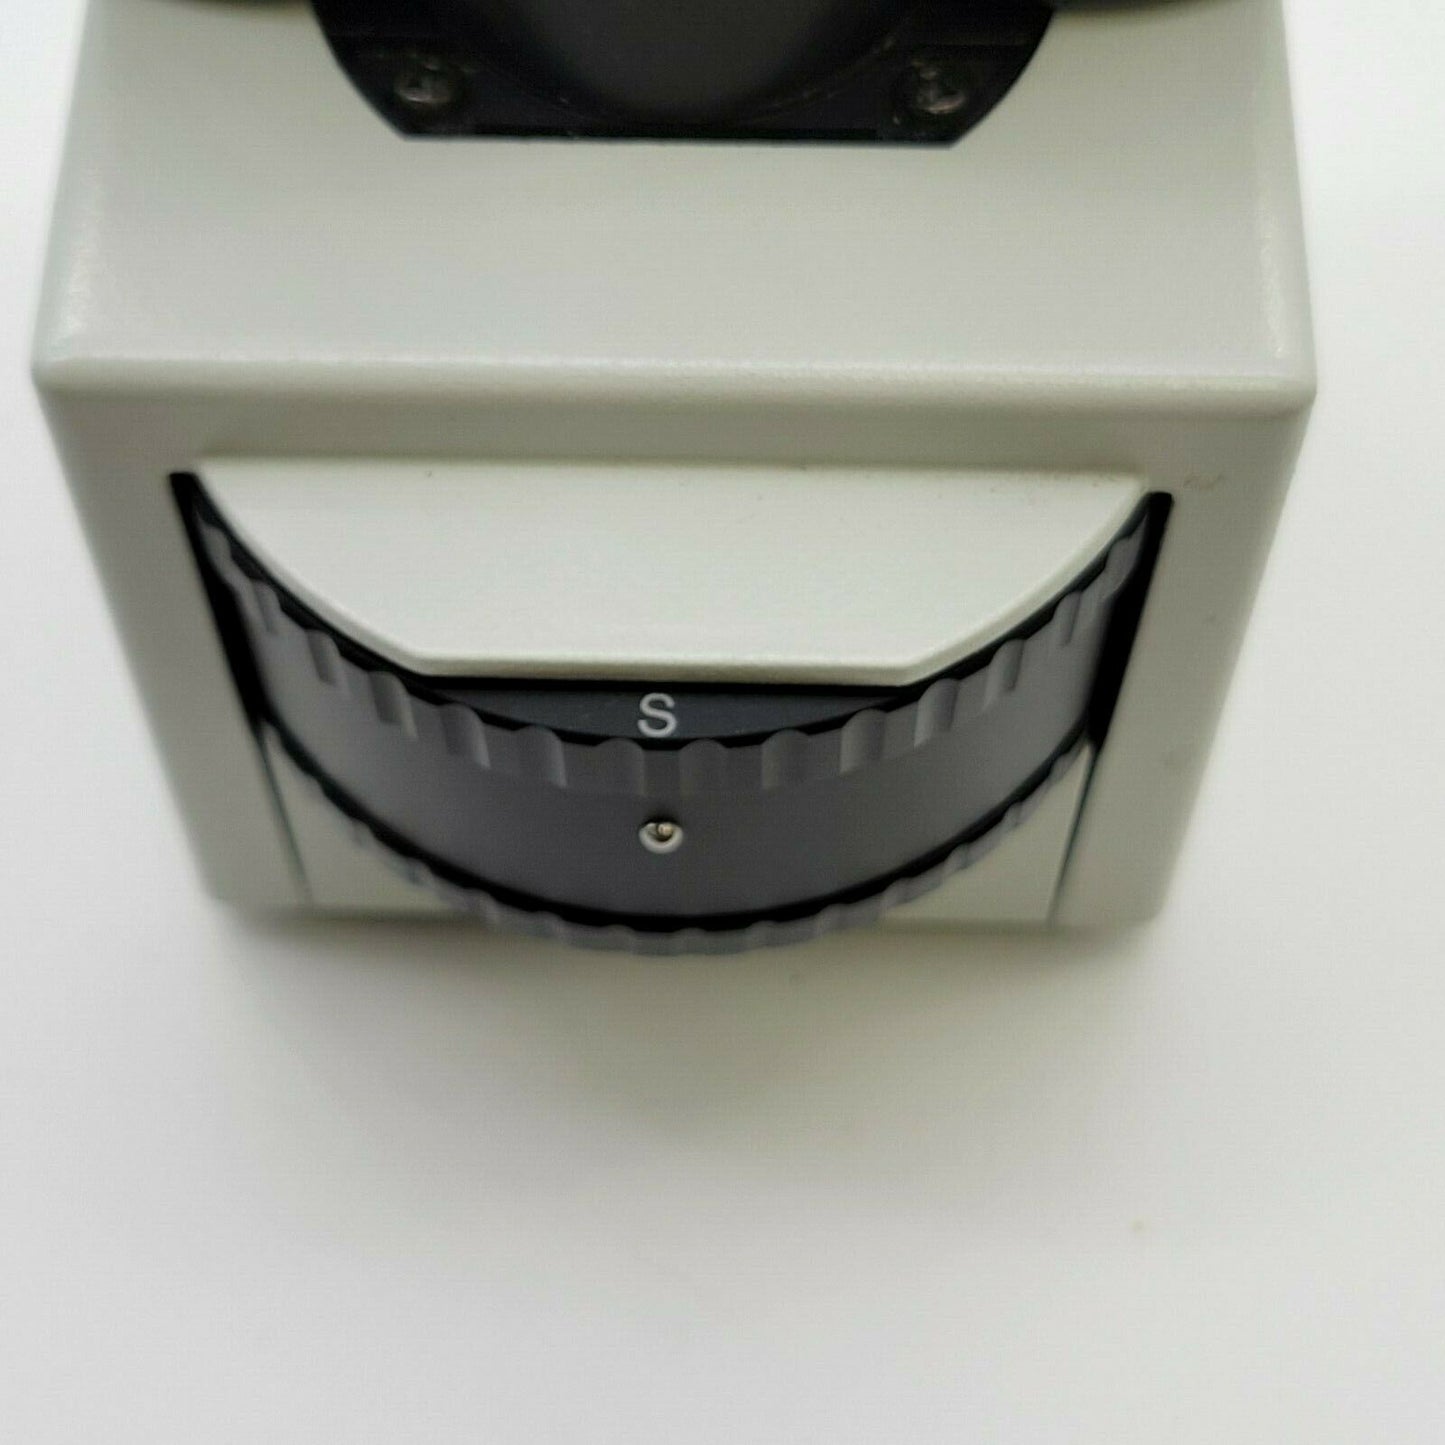 Olympus Microscope Binocular Head Tube with Centering Telescope U-BI90CT IX GX - microscopemarketplace